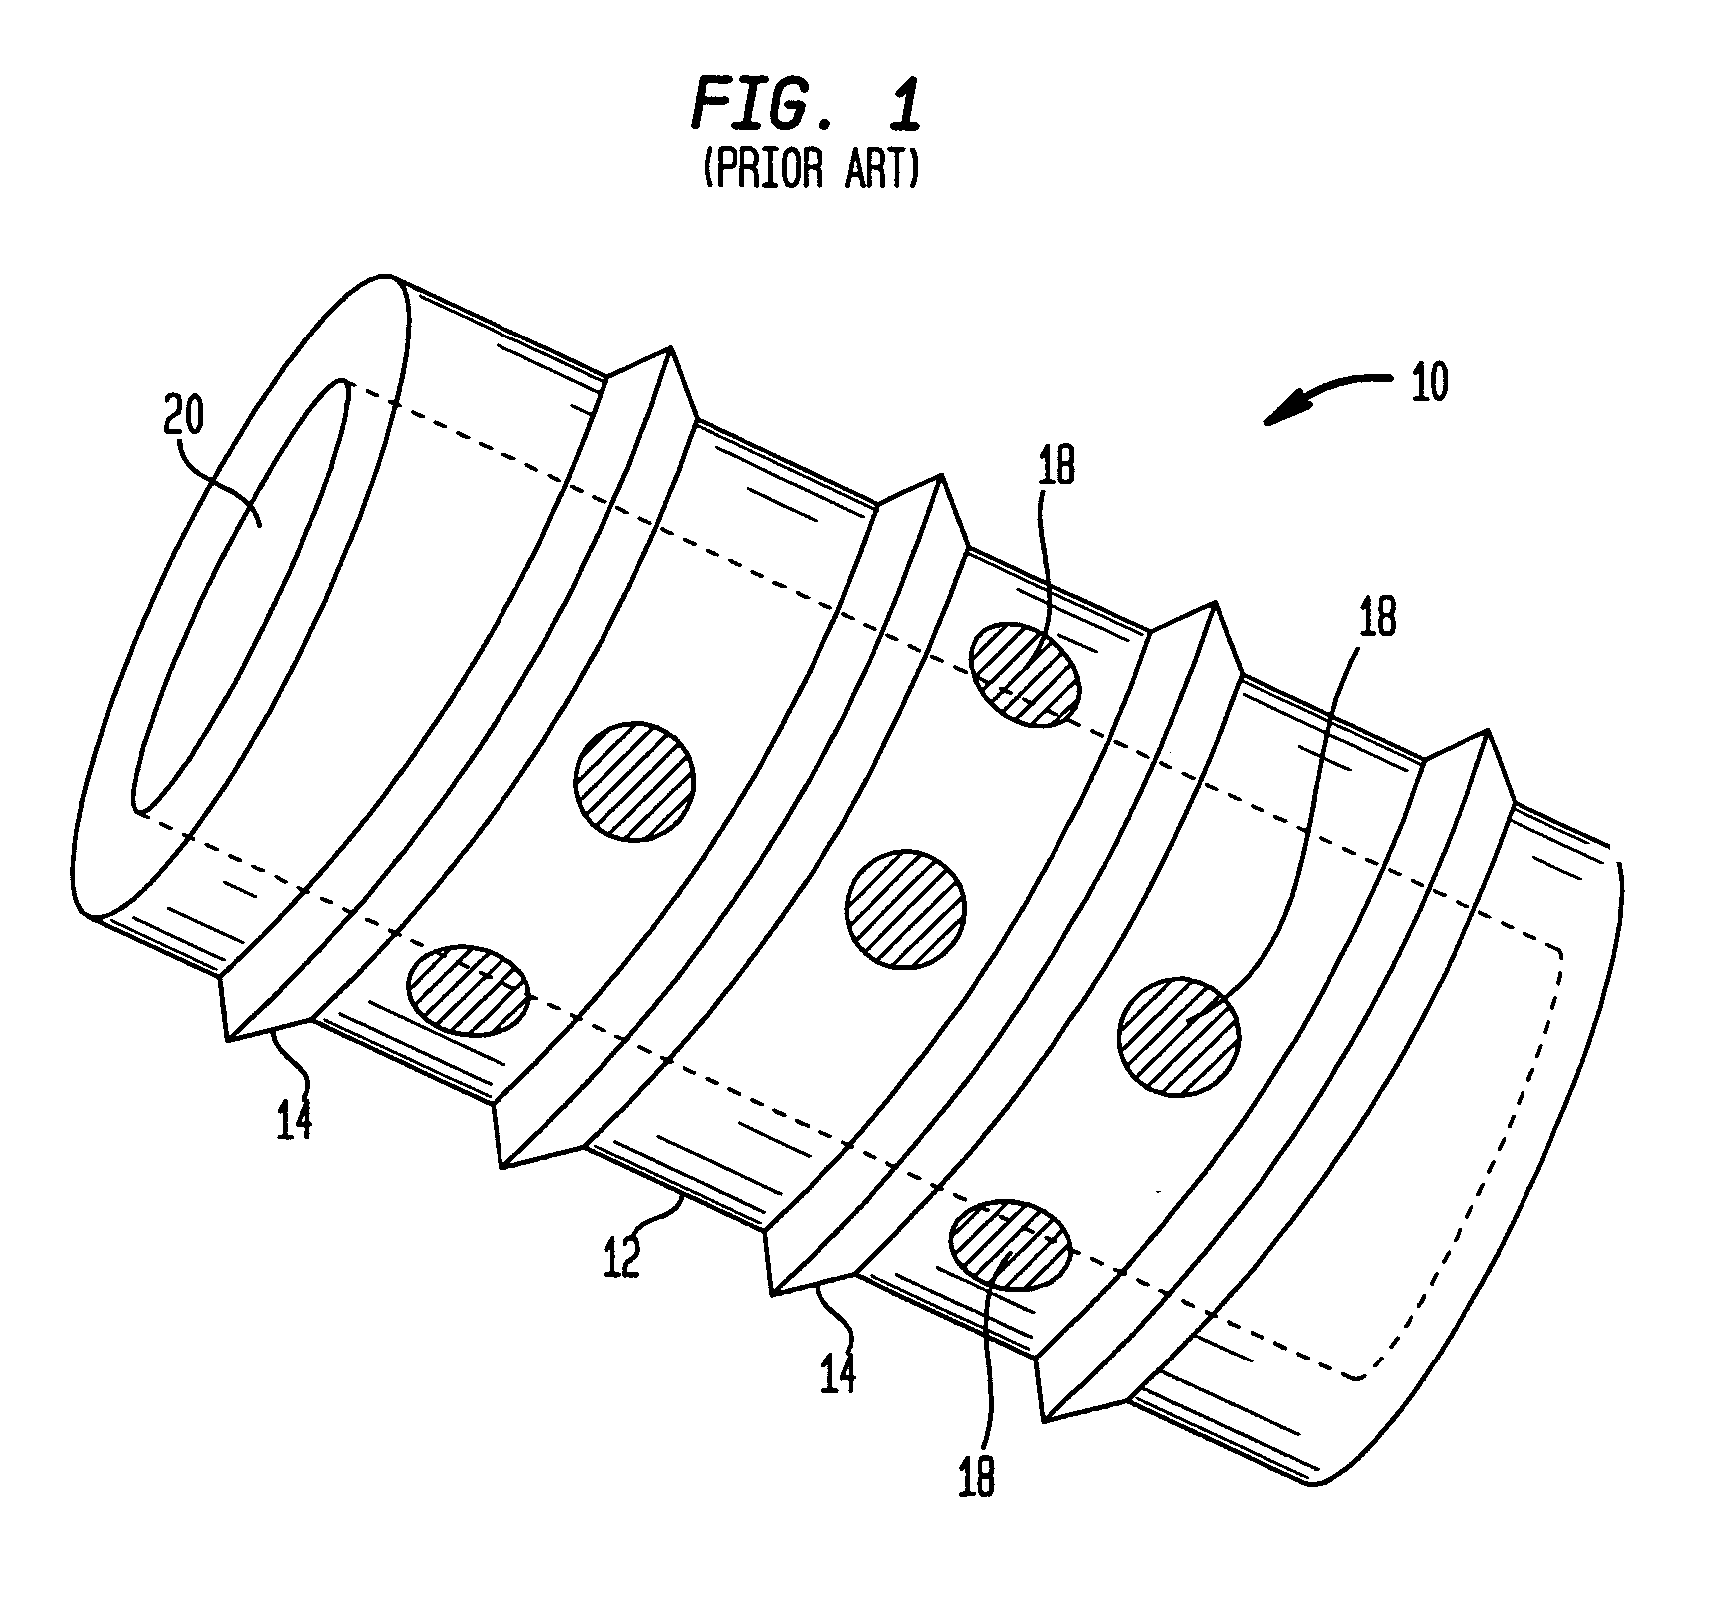 Intervertebral spacer device utilizing a spirally slotted belleville washer having radially extending grooves